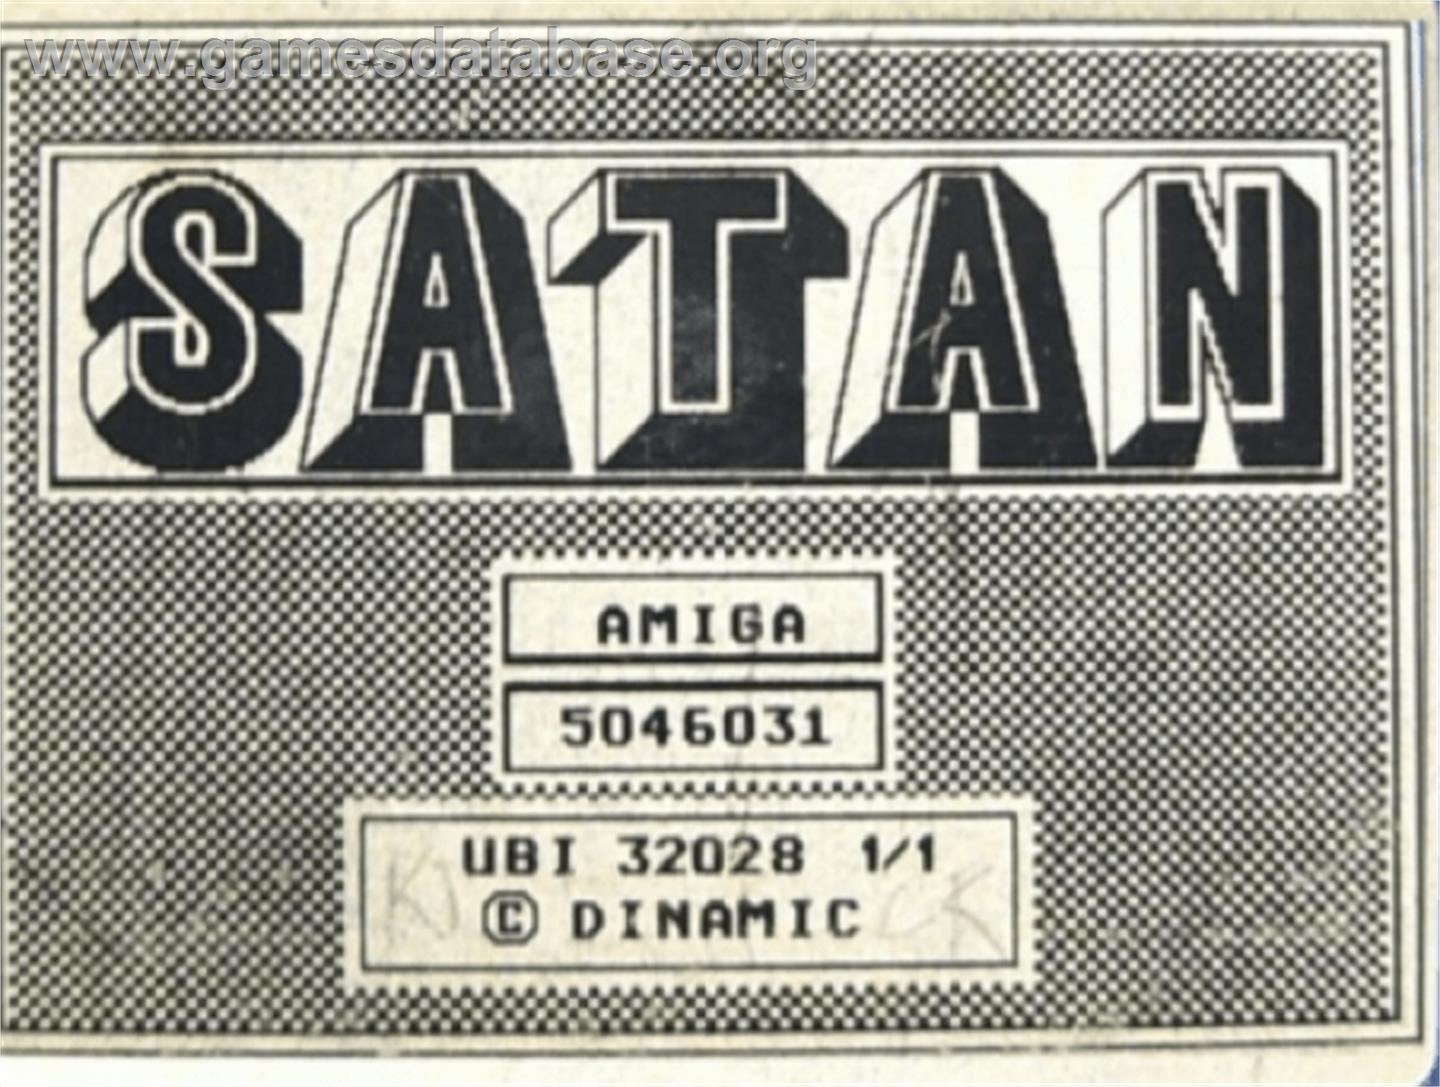 Satan - Commodore Amiga - Artwork - Cartridge Top